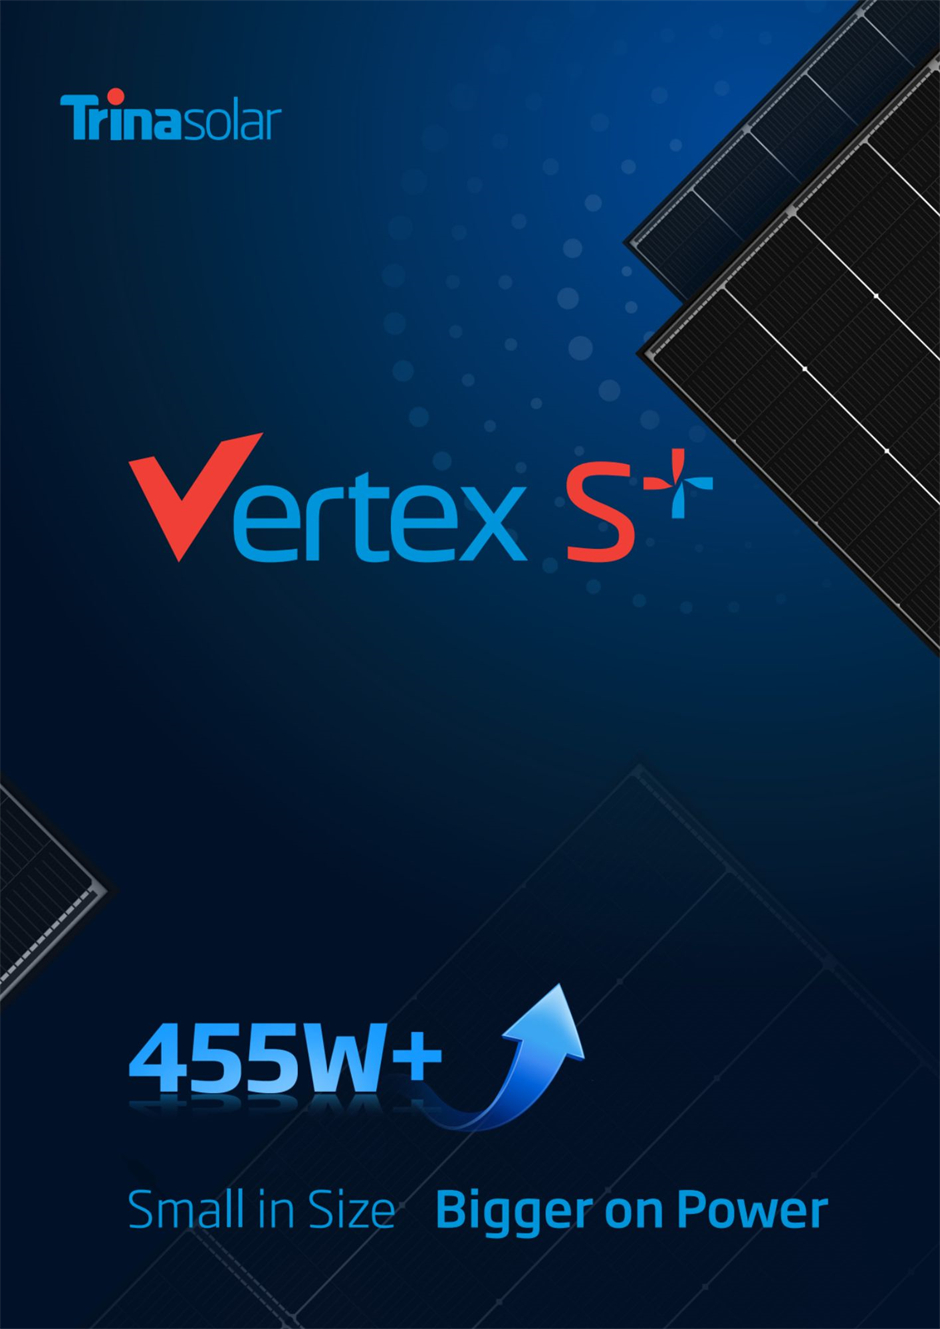 Trinasolar’s Vertex S+ 455W+ solar module: Small in size, bigger on power